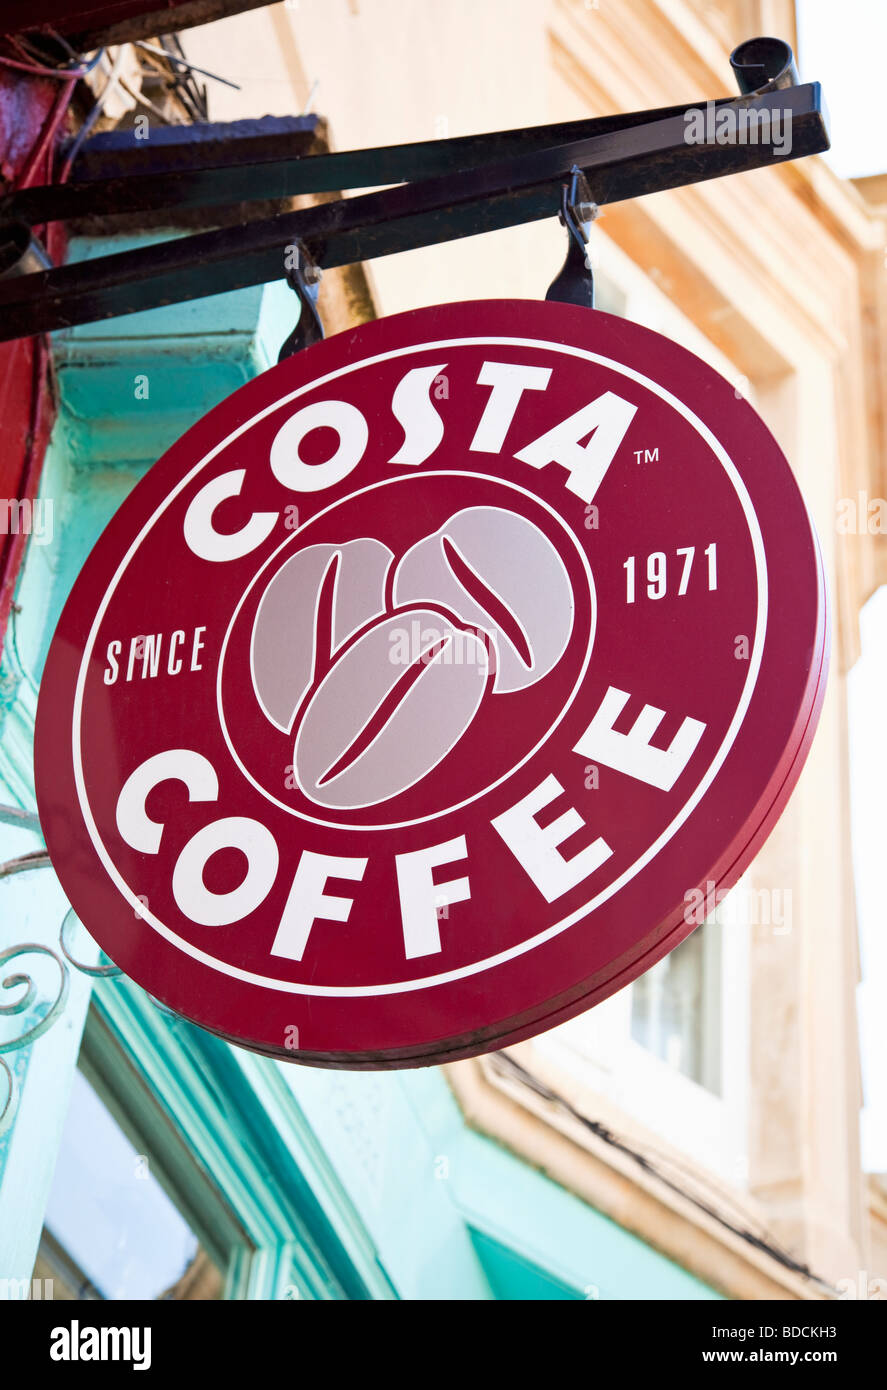 Logo café Costa signe, England, UK Banque D'Images